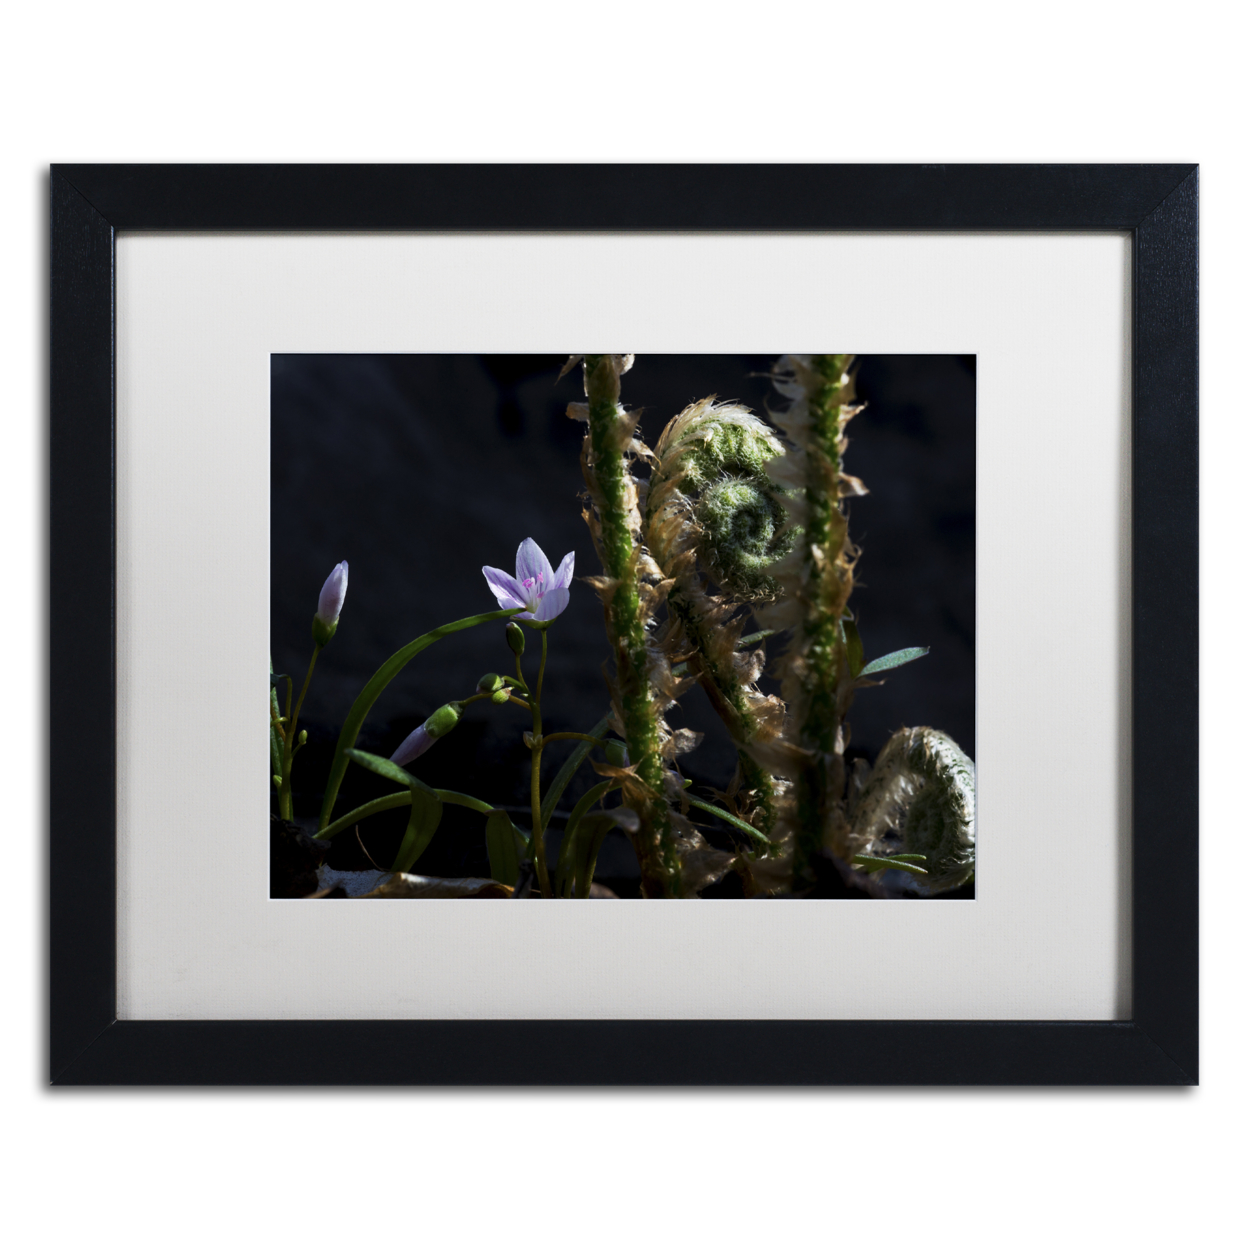 Kurt Shaffer 'Flowers And Fronds' Black Wooden Framed Art 18 X 22 Inches